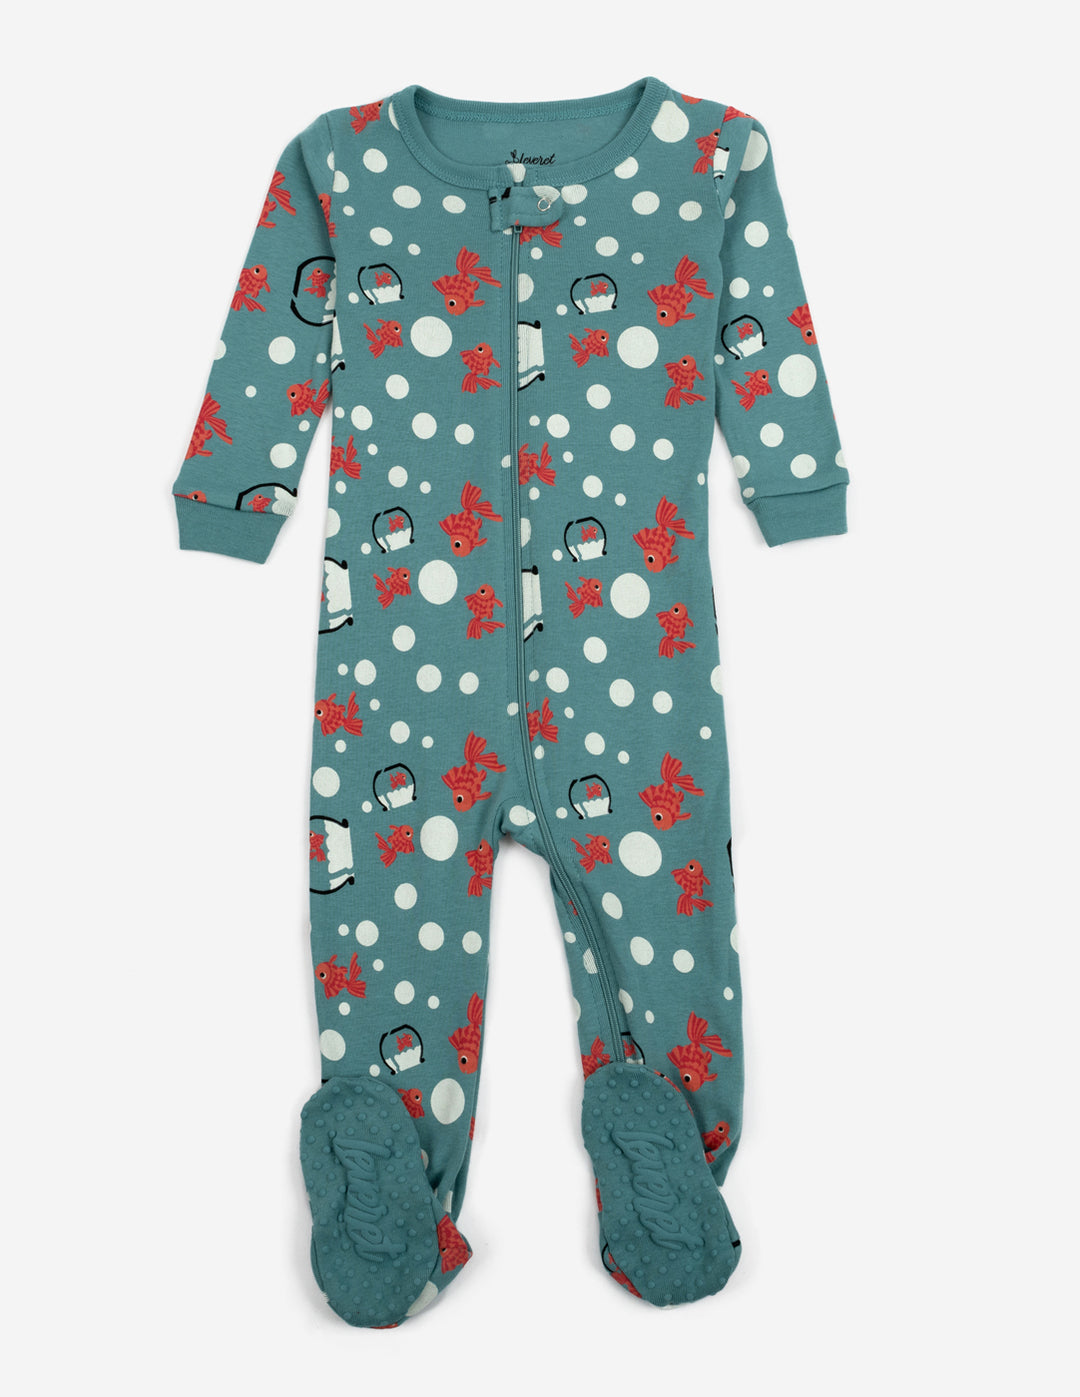 teal fish baby cotton footed pajamas